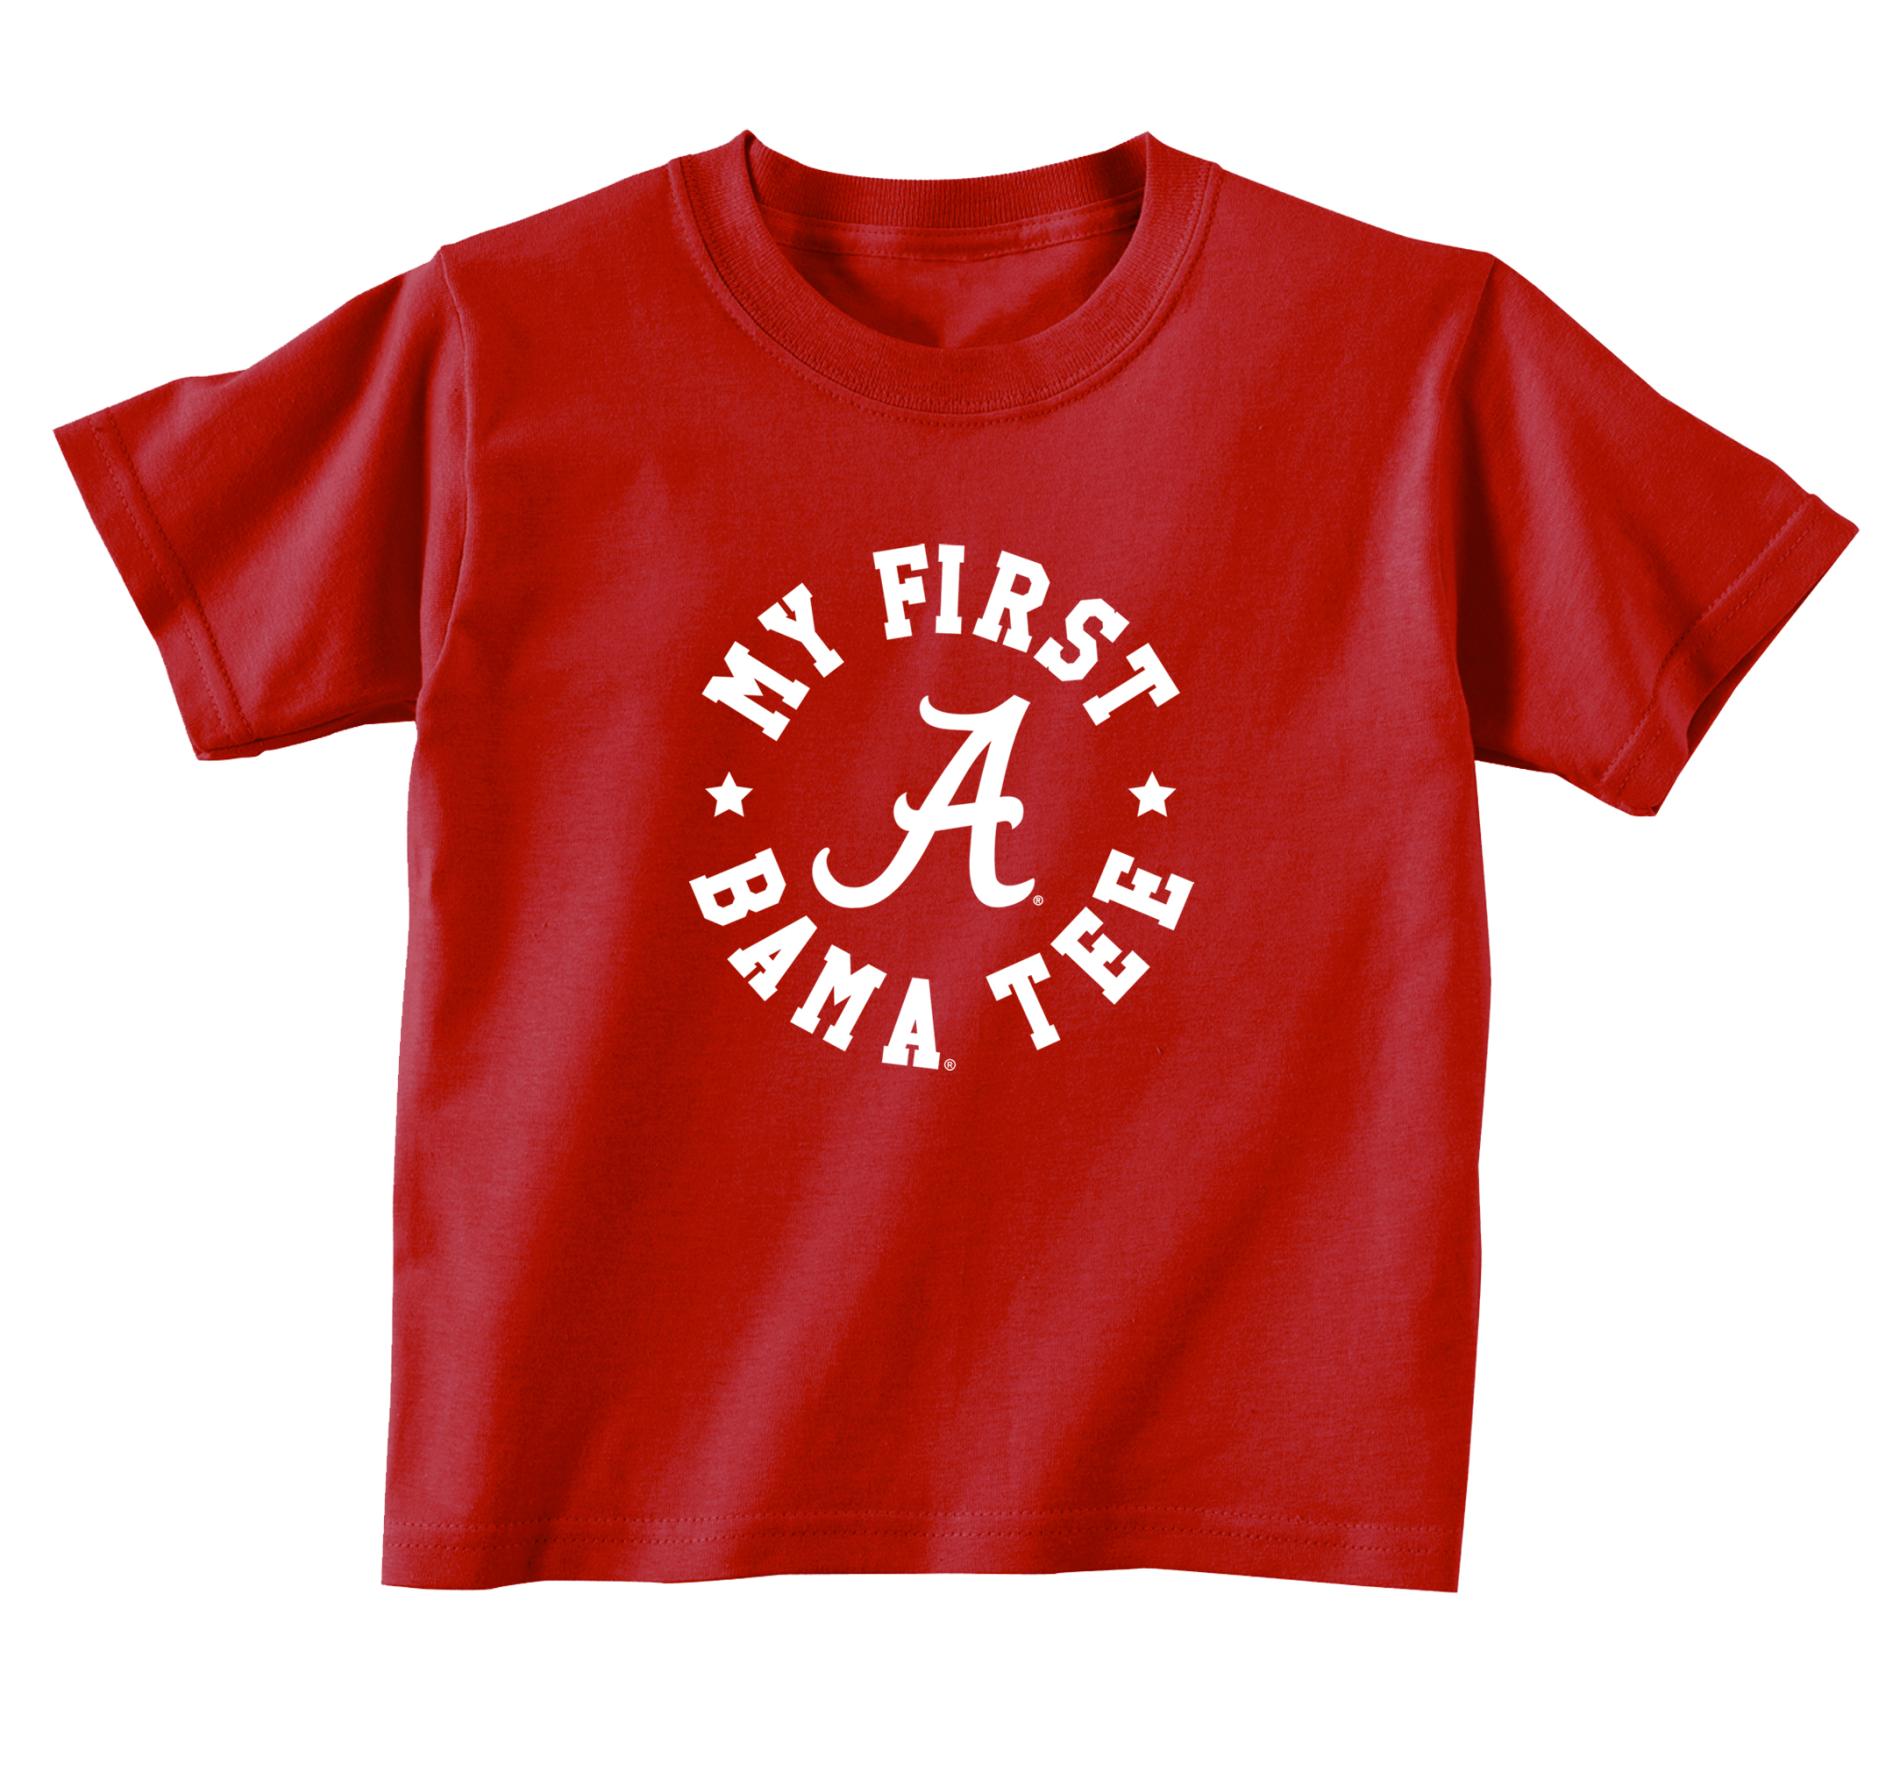 NCAA Toddlers' Graphic T-Shirt - University of Alabama Crimson Tide